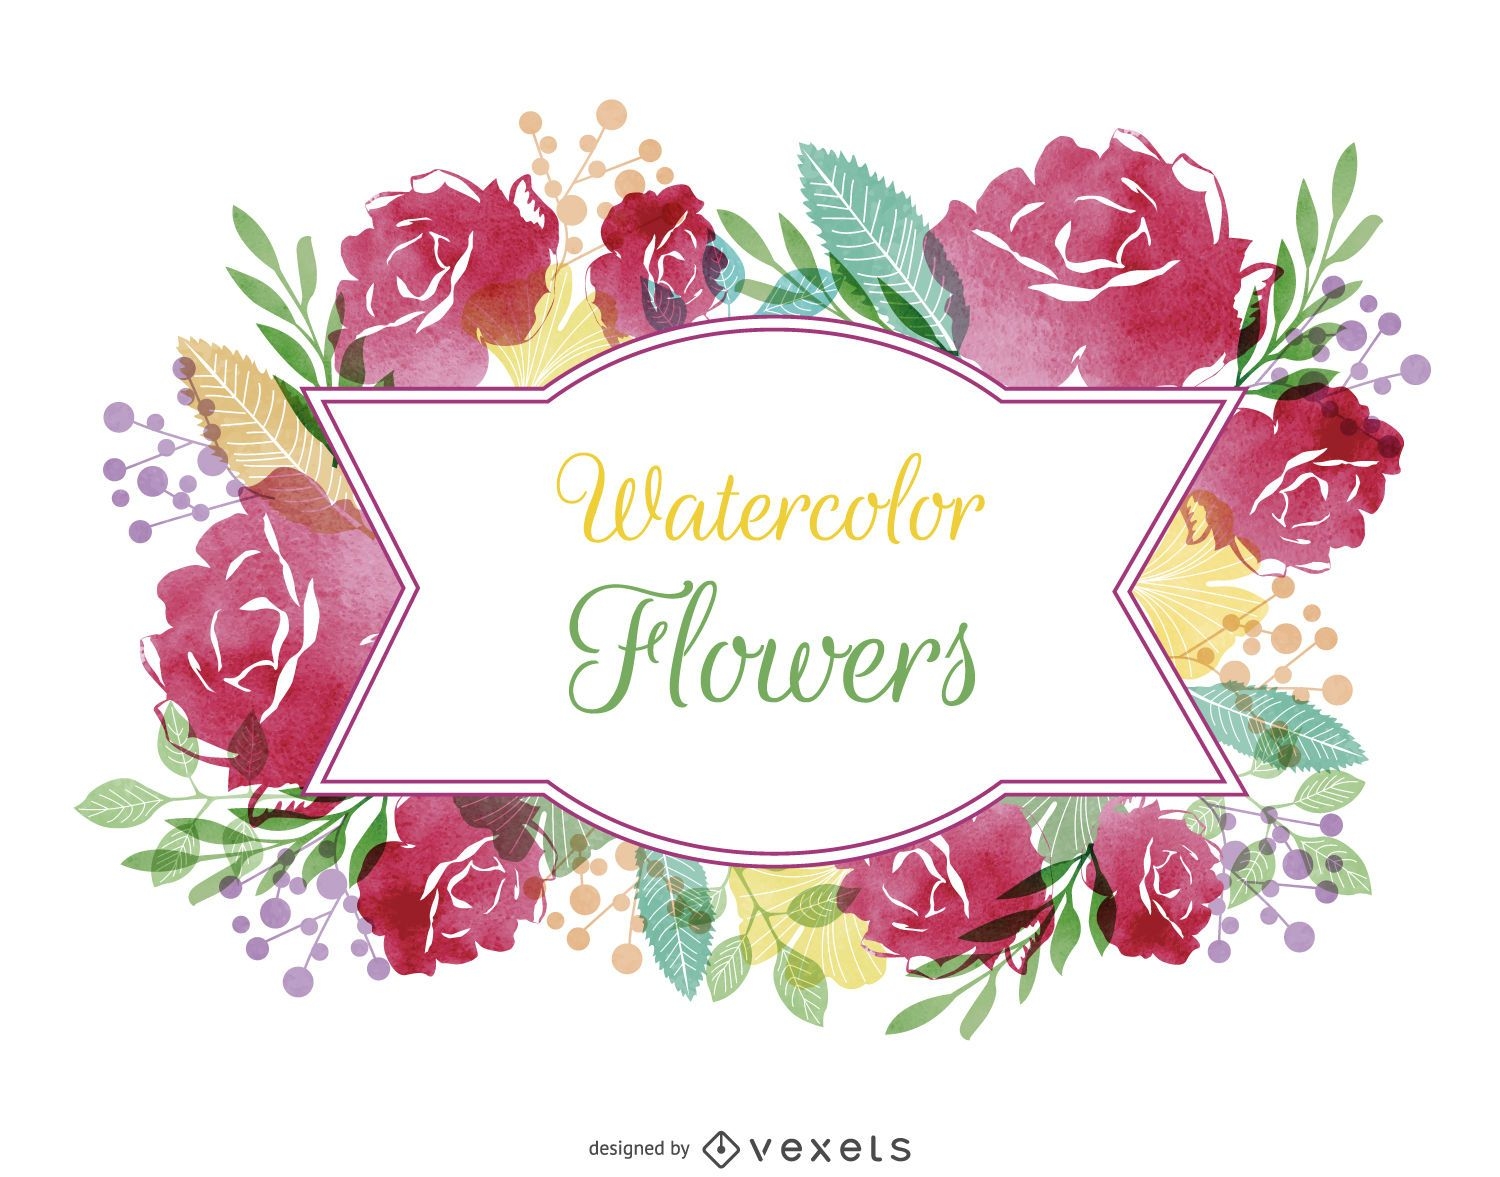 Watercolor flower label